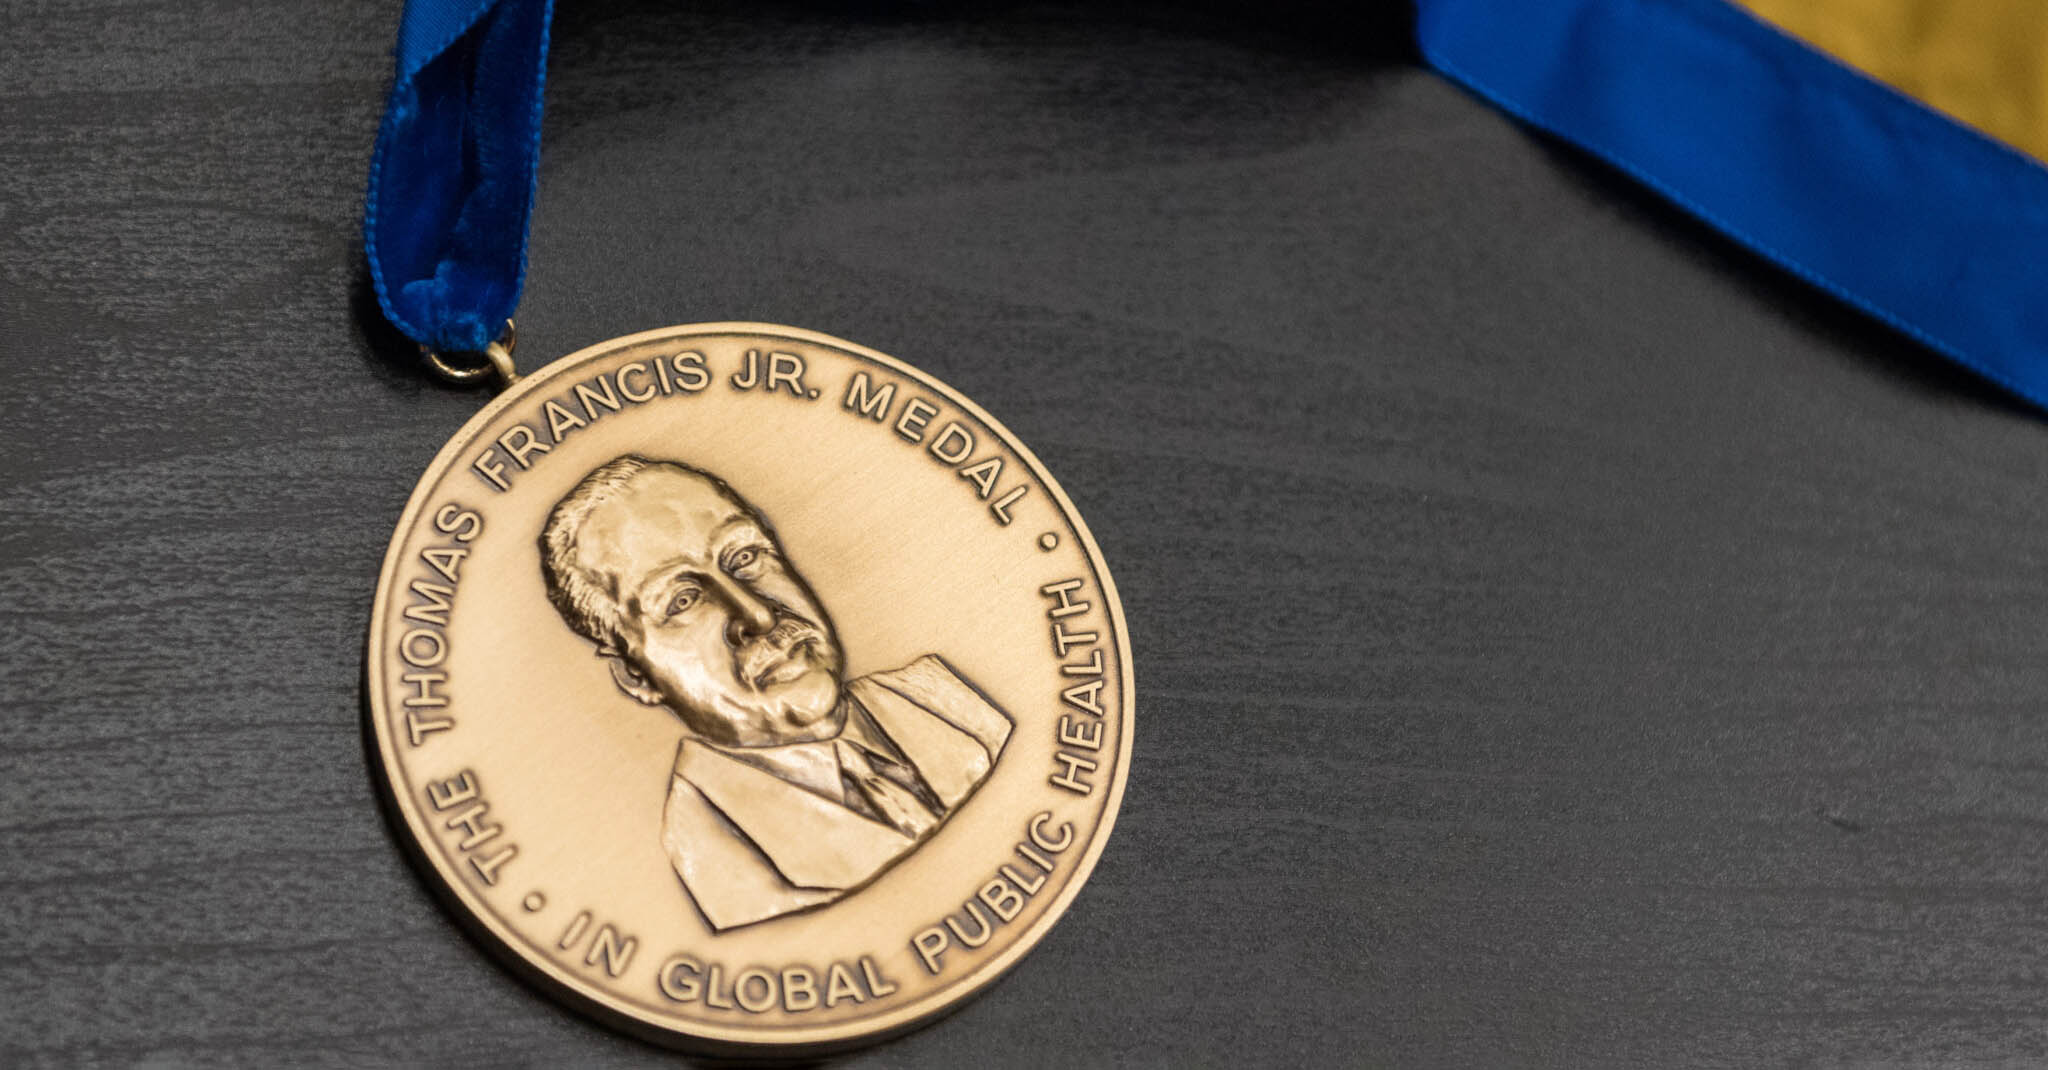 The Thomas Francis Jr. Medal sits on a wood desk.